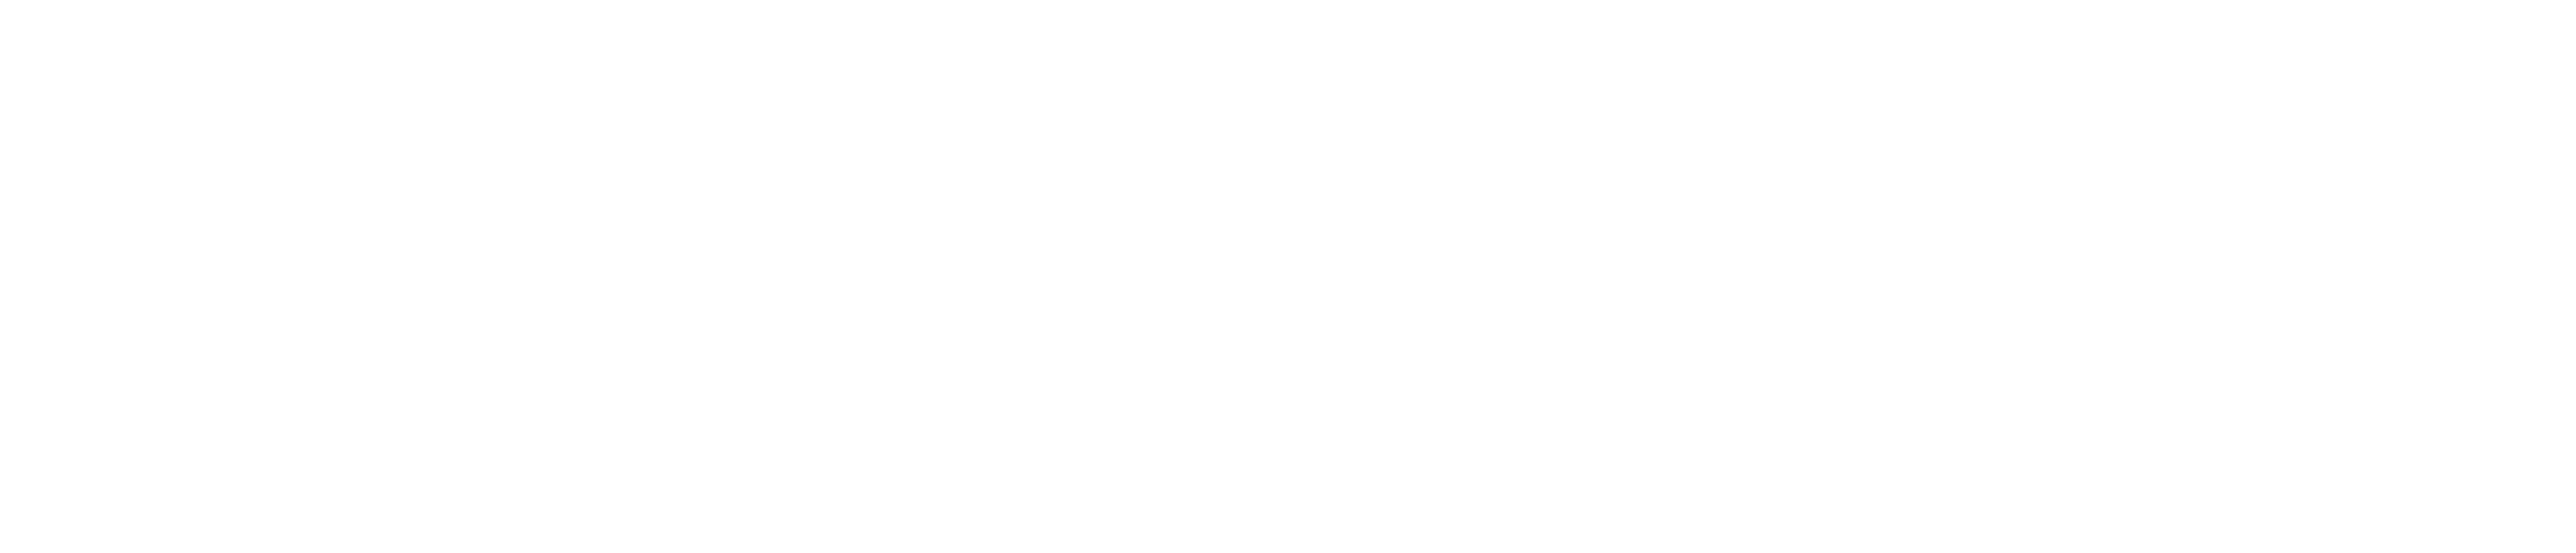 logo-farm